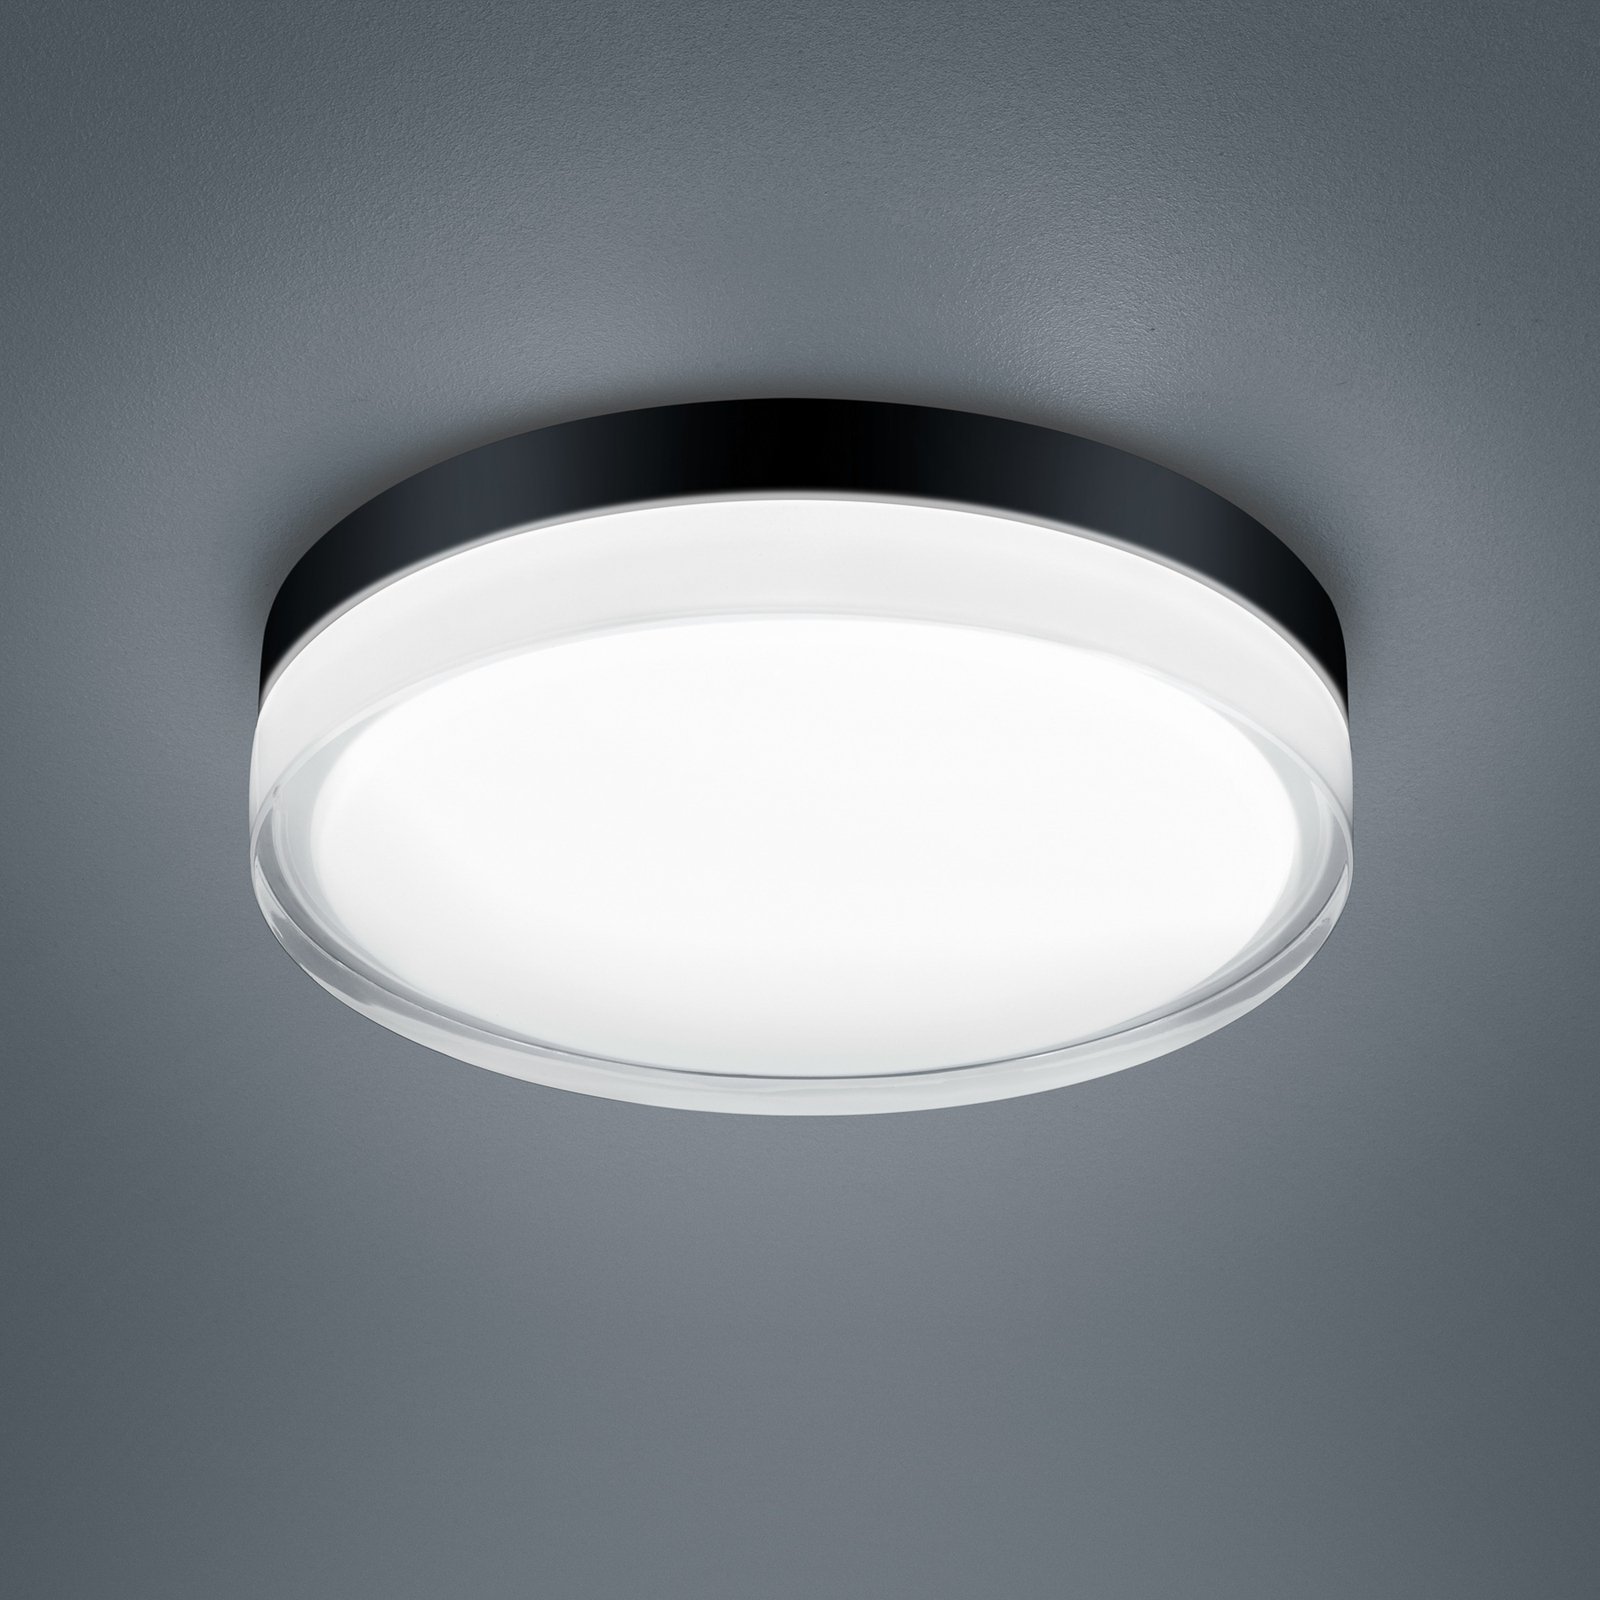 Helestra Tana LED ceiling light, black, Ø 28 cm